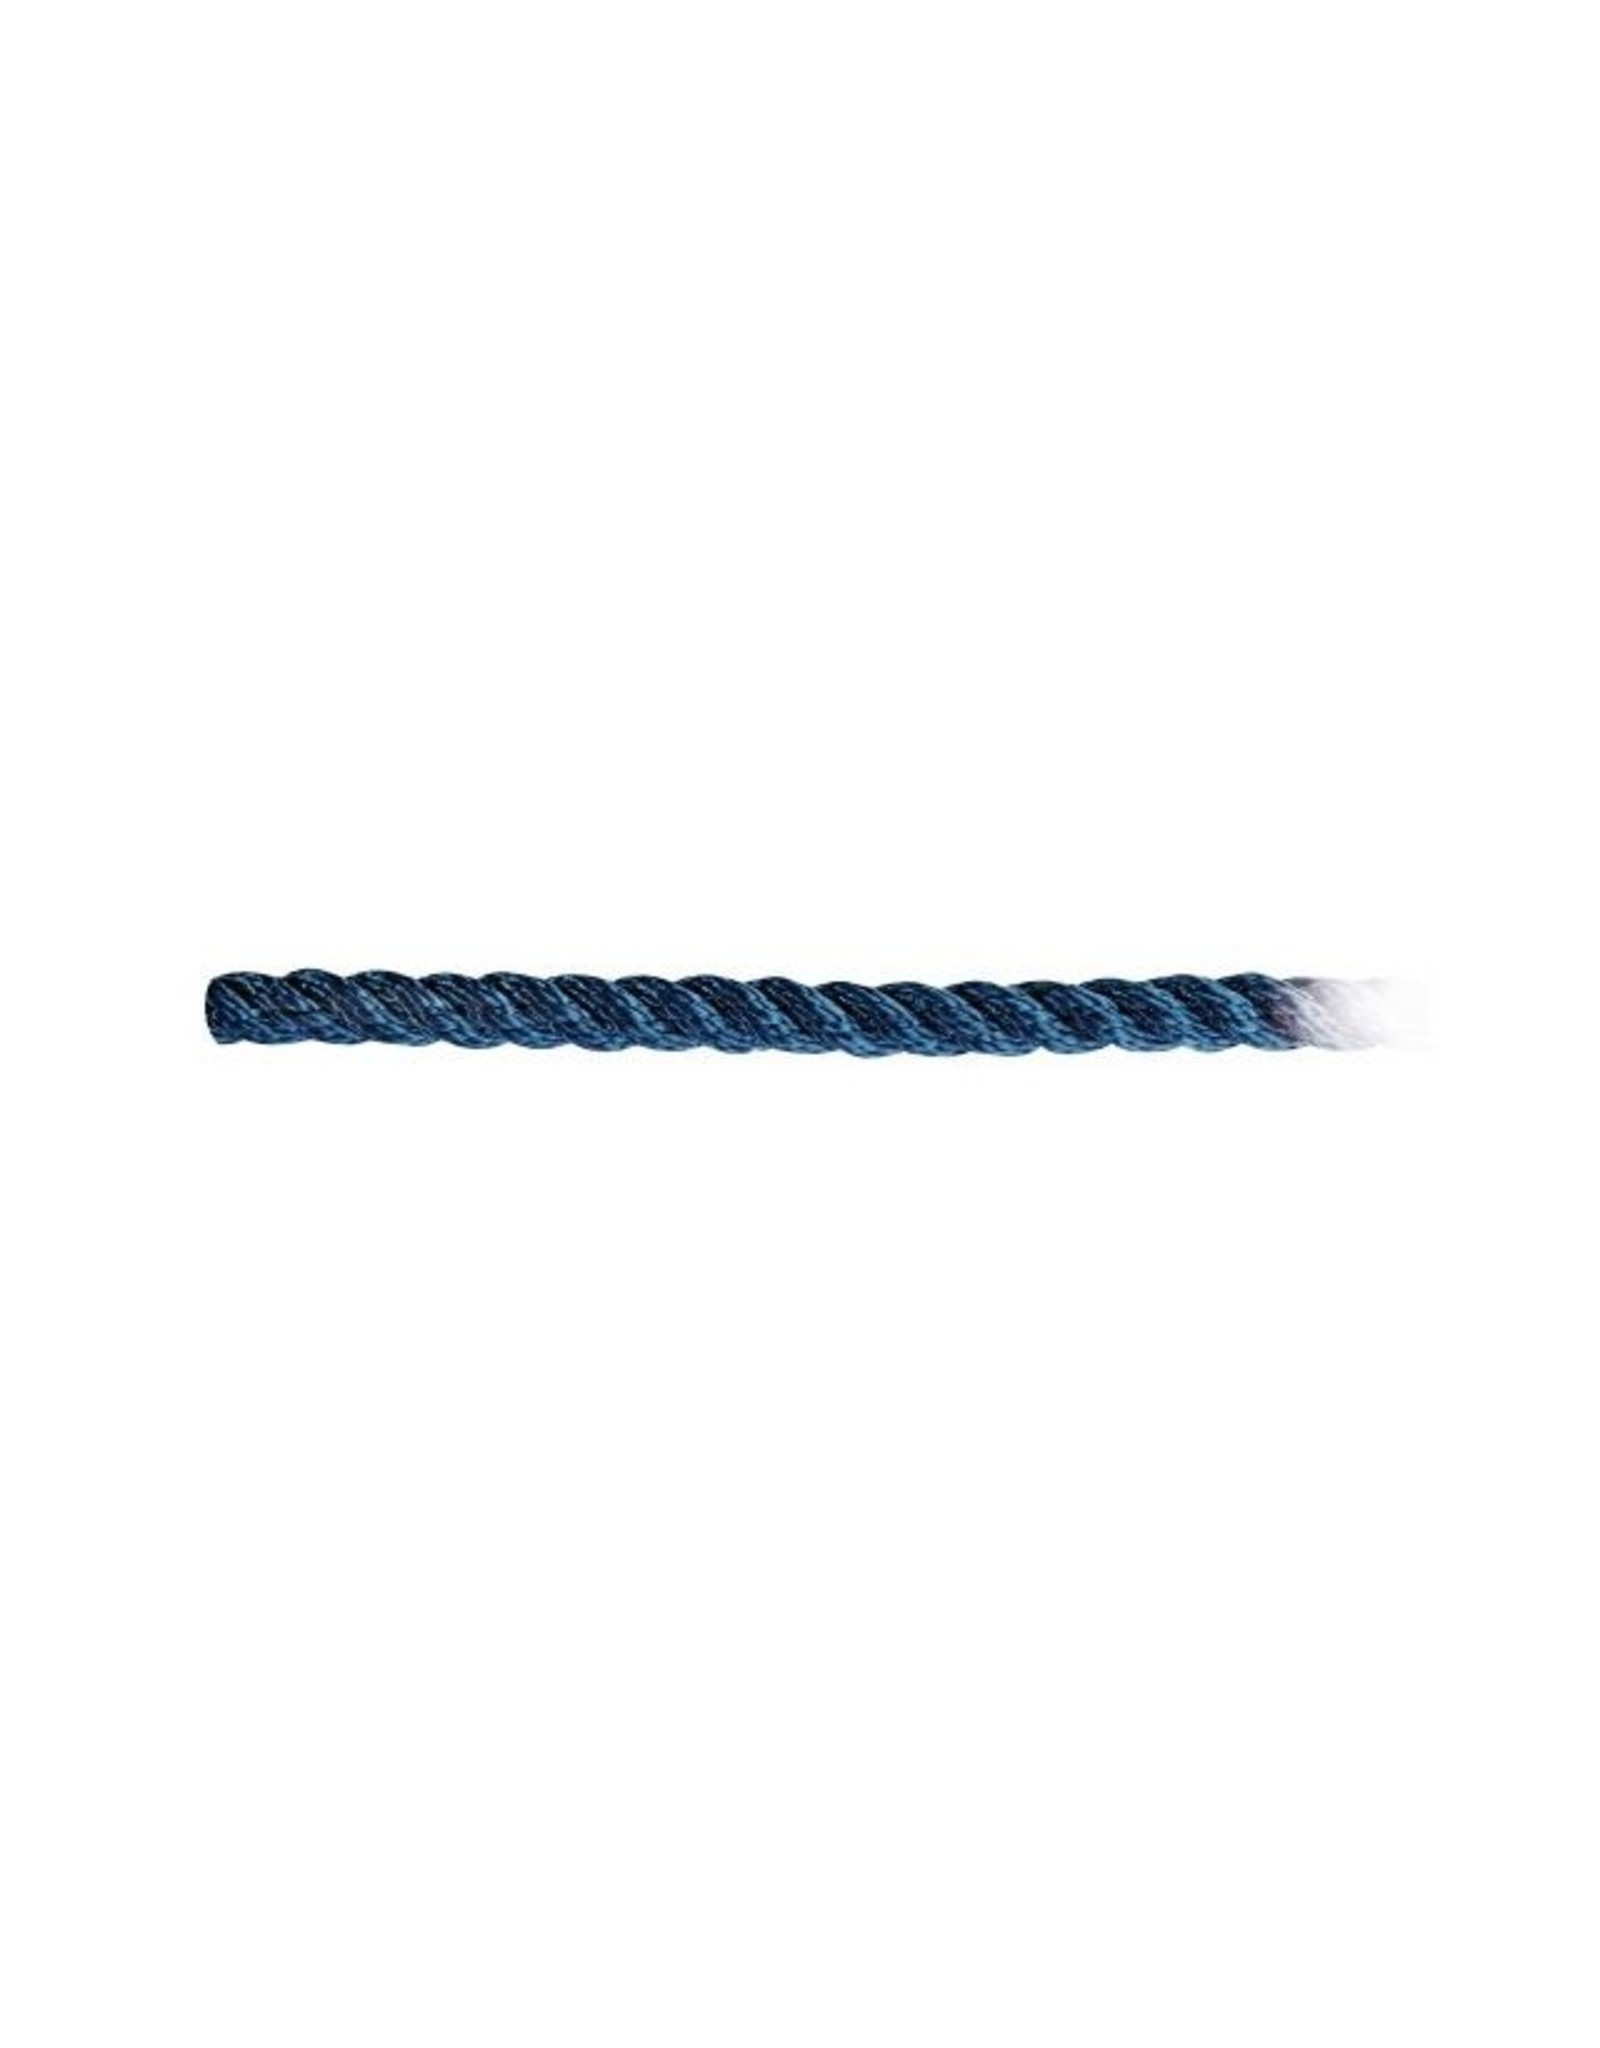 Blauw 8mm touw per meter